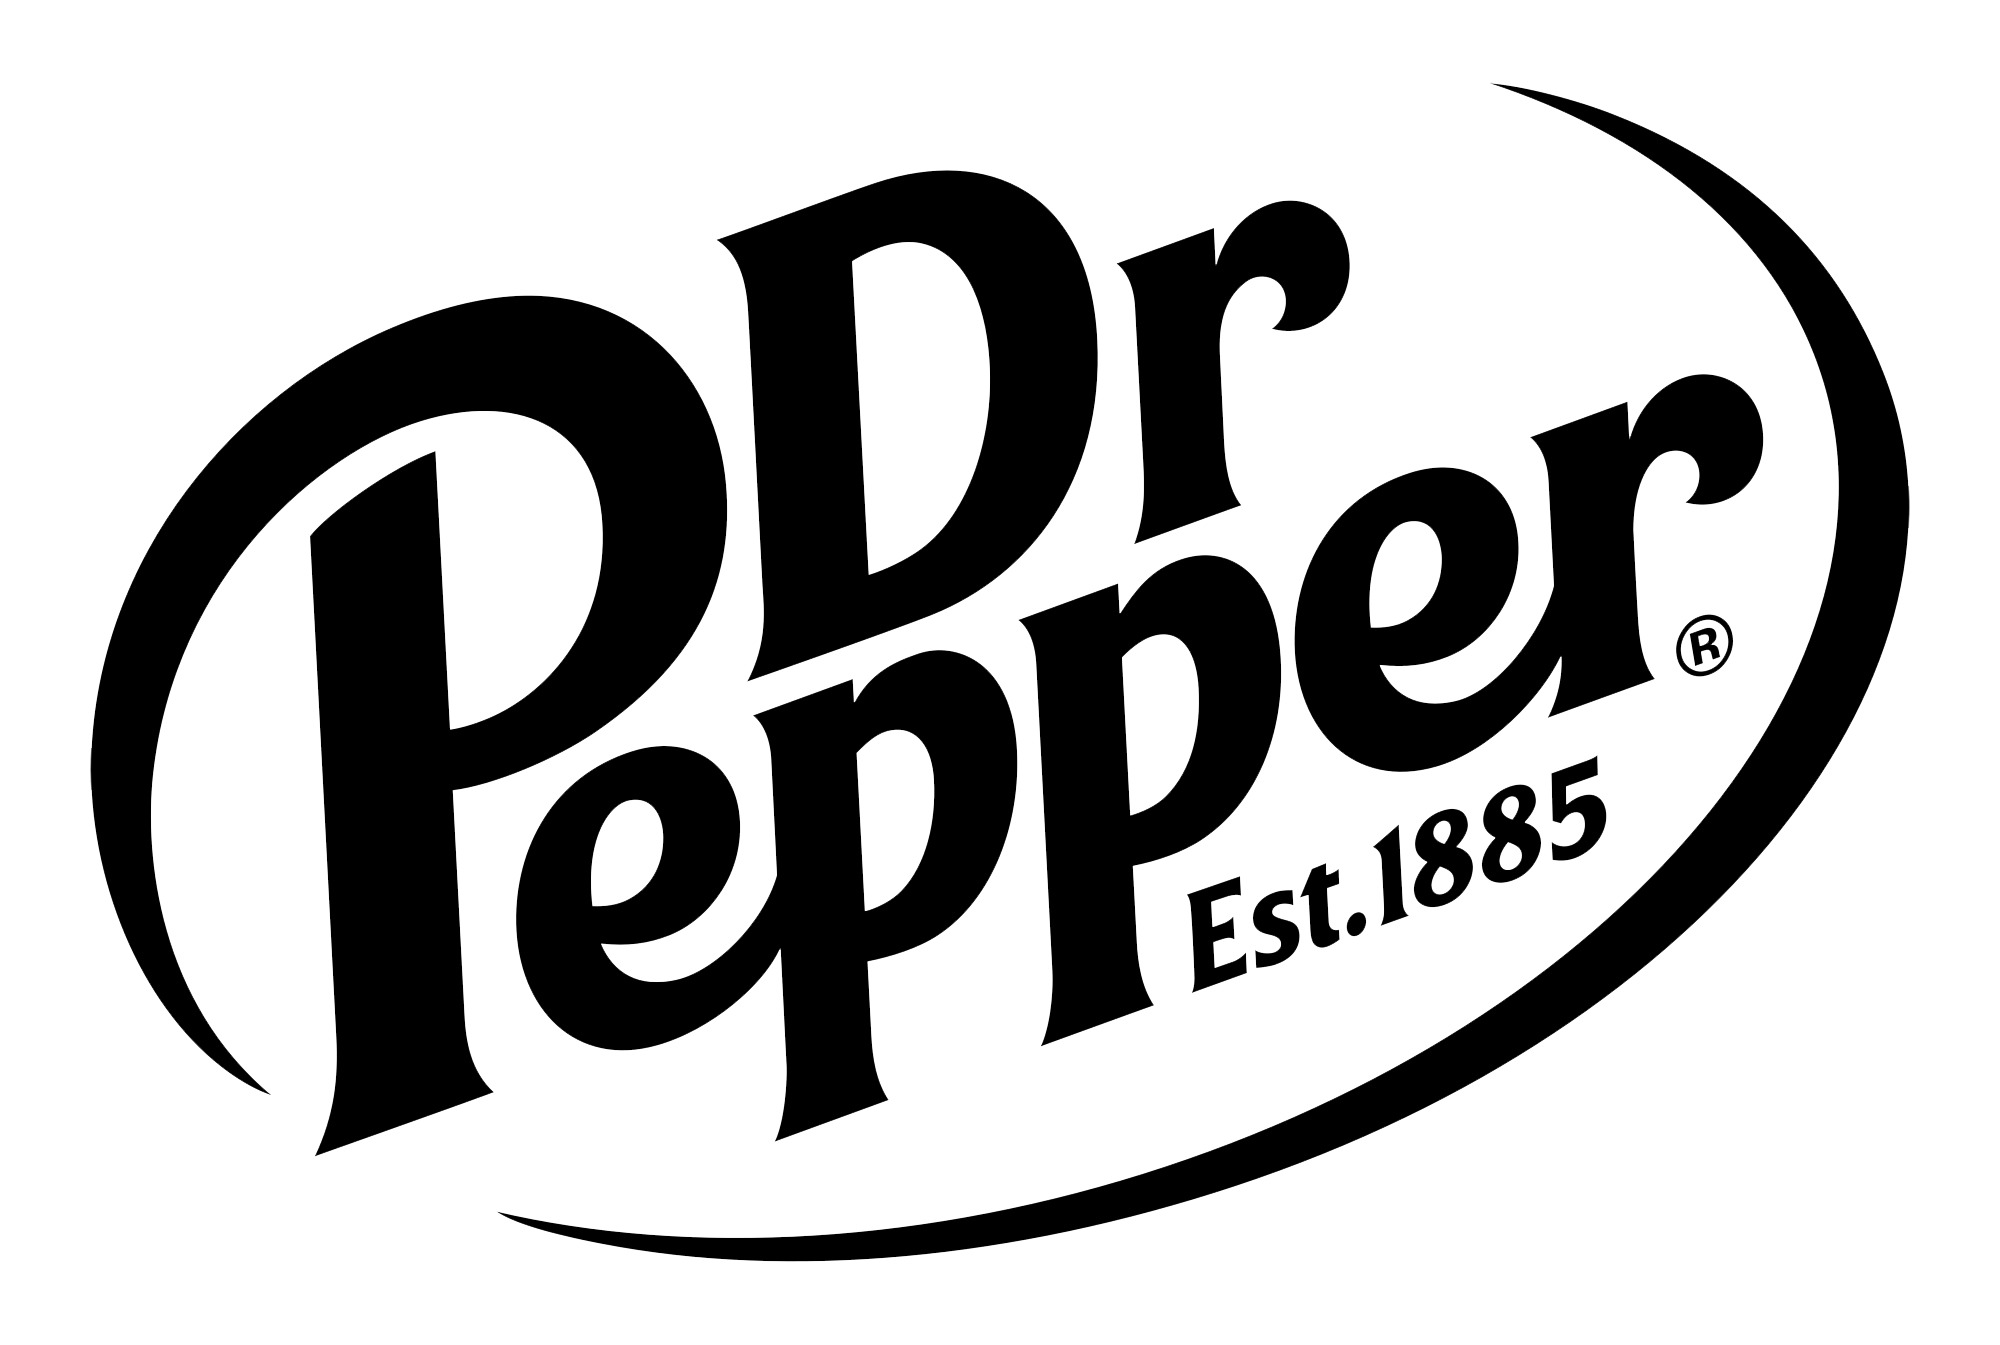 graphic design Dr. pepper logo